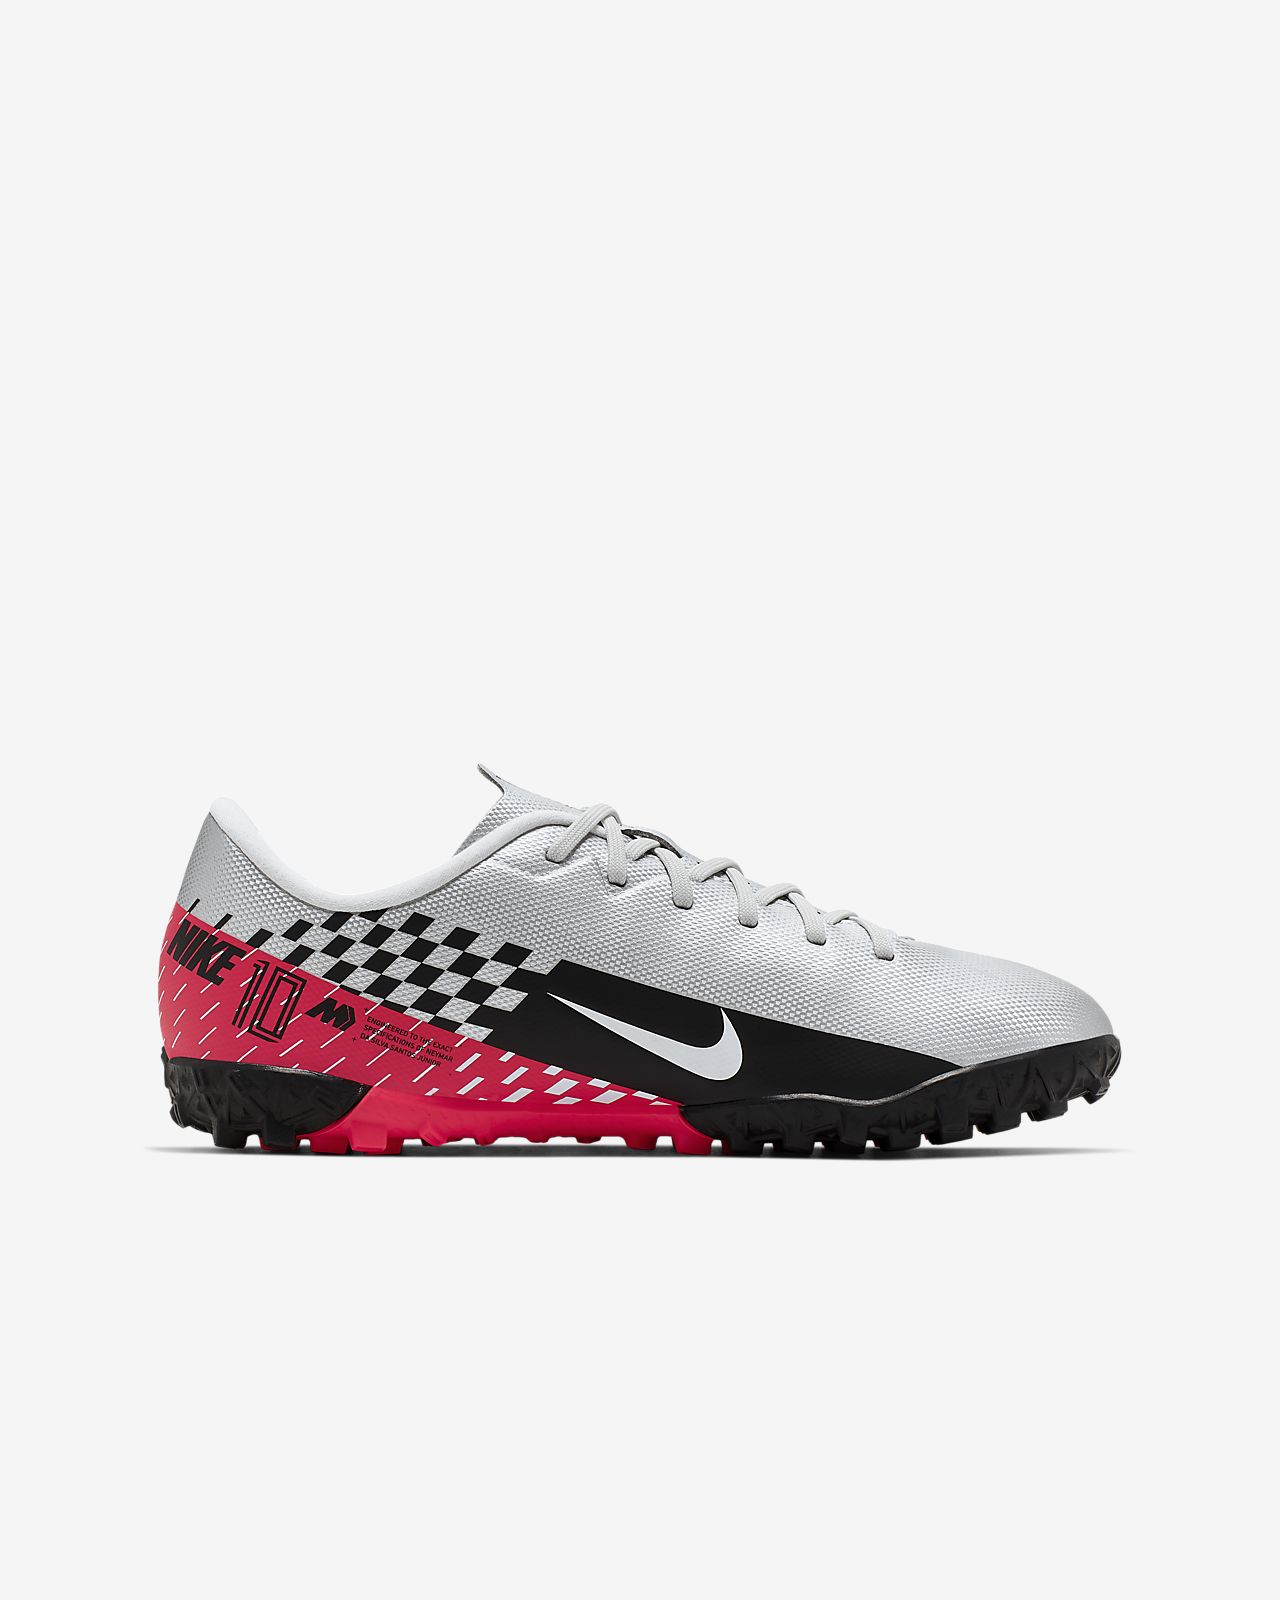 Nike Mercurial Vapor VII FG Soccer Cleats Size 7 441976 051